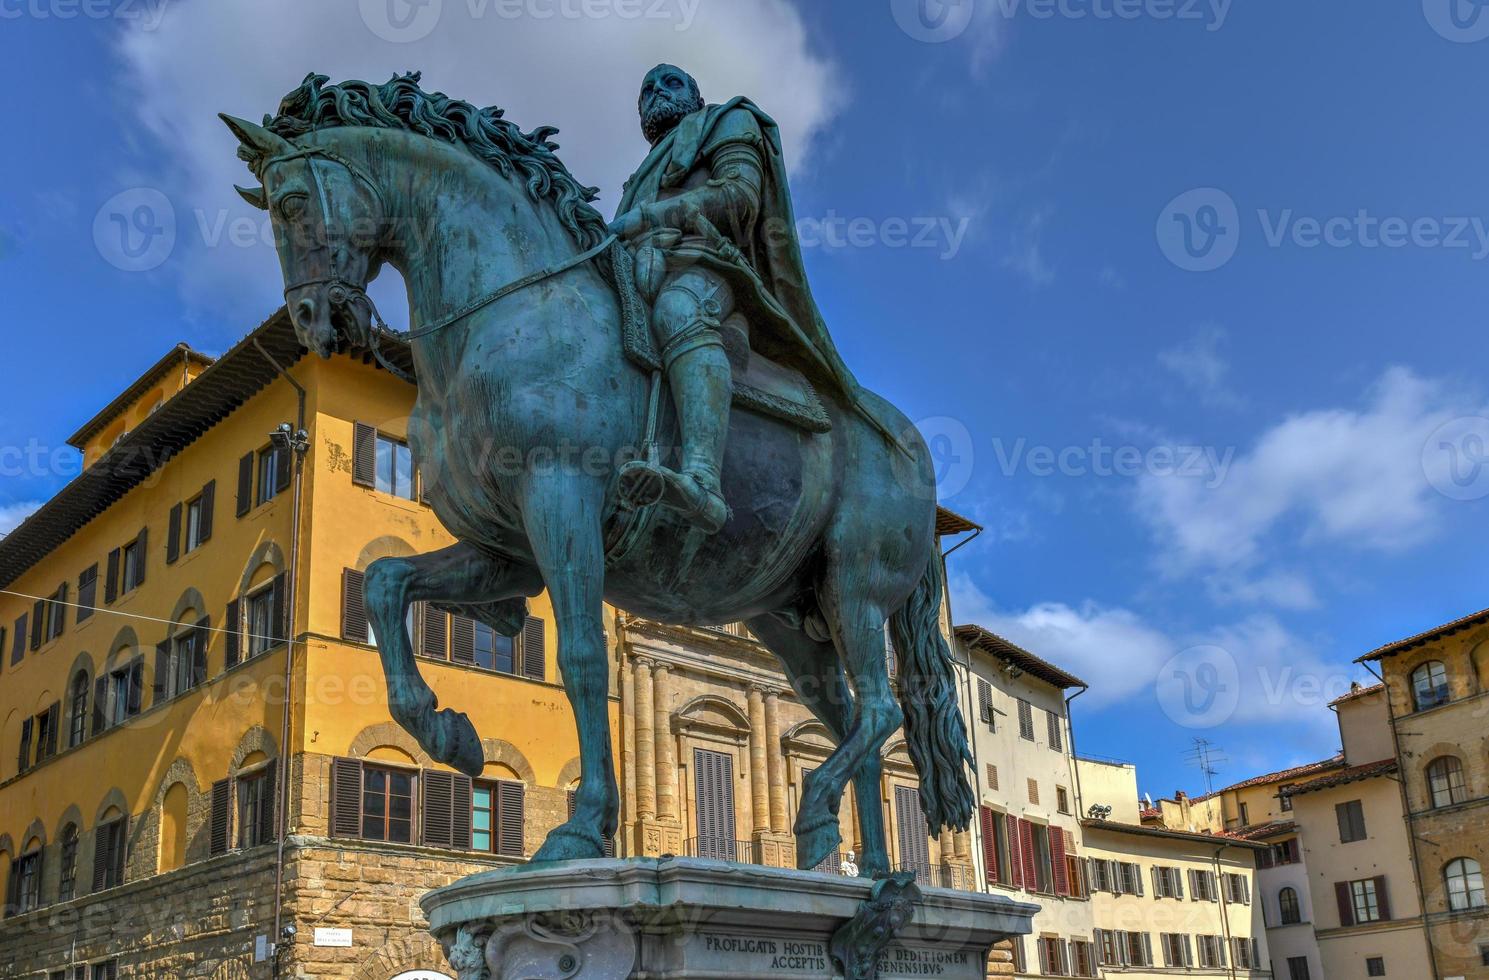 ryttare staty av cosimo jag de' medici på de piazza della Signoria, förbi giambologna. Florens, Italien. foto